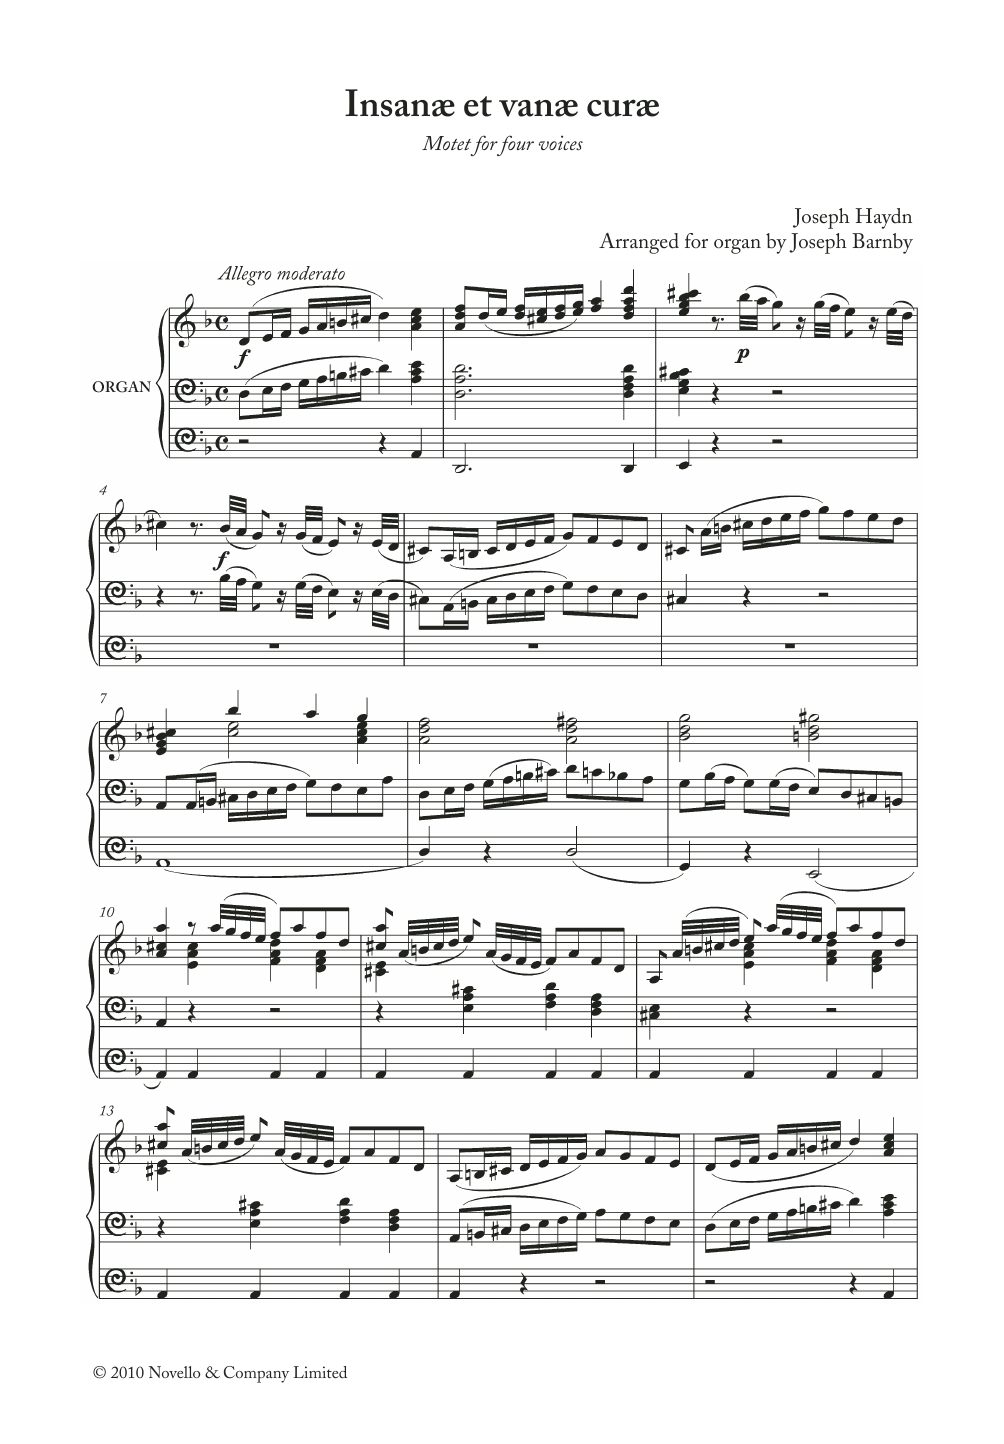 Download Franz Joseph Haydn Insanae Et Vanae Curae Sheet Music